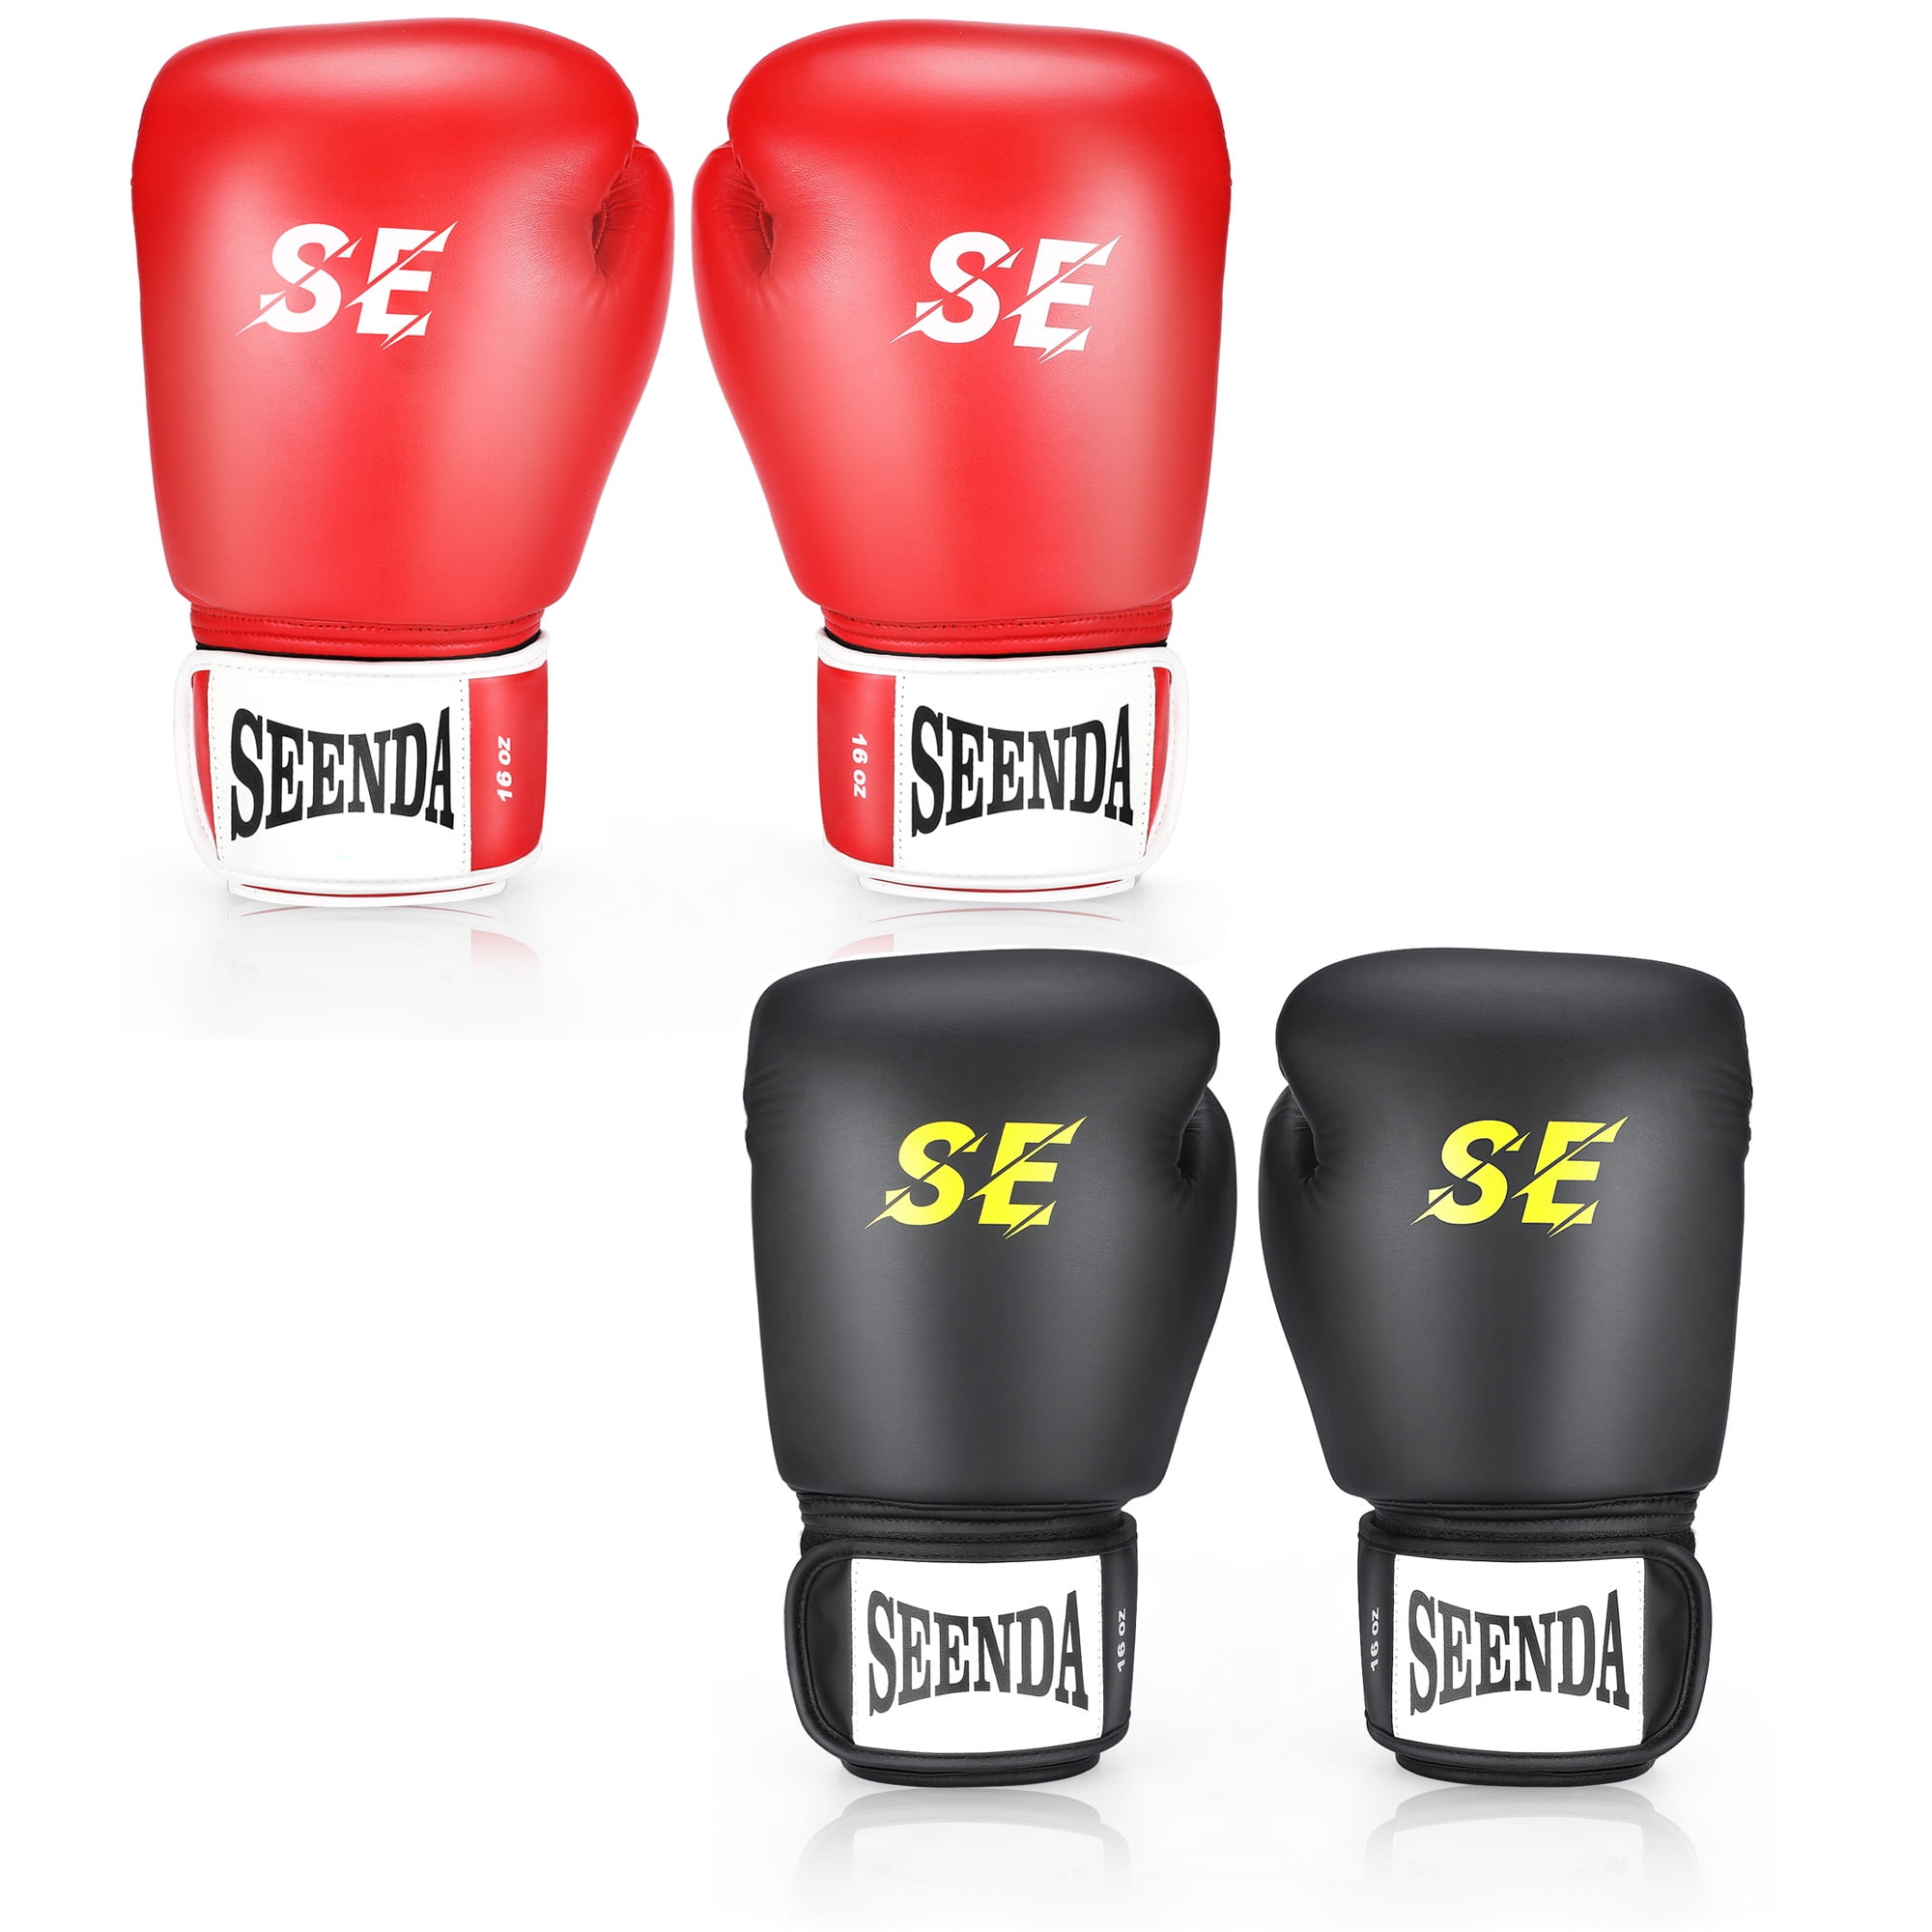 Pro Style Elite Heavy Bag Training Boxing Gloves Fight Punch Mitts 6oz 14oz 16oz 